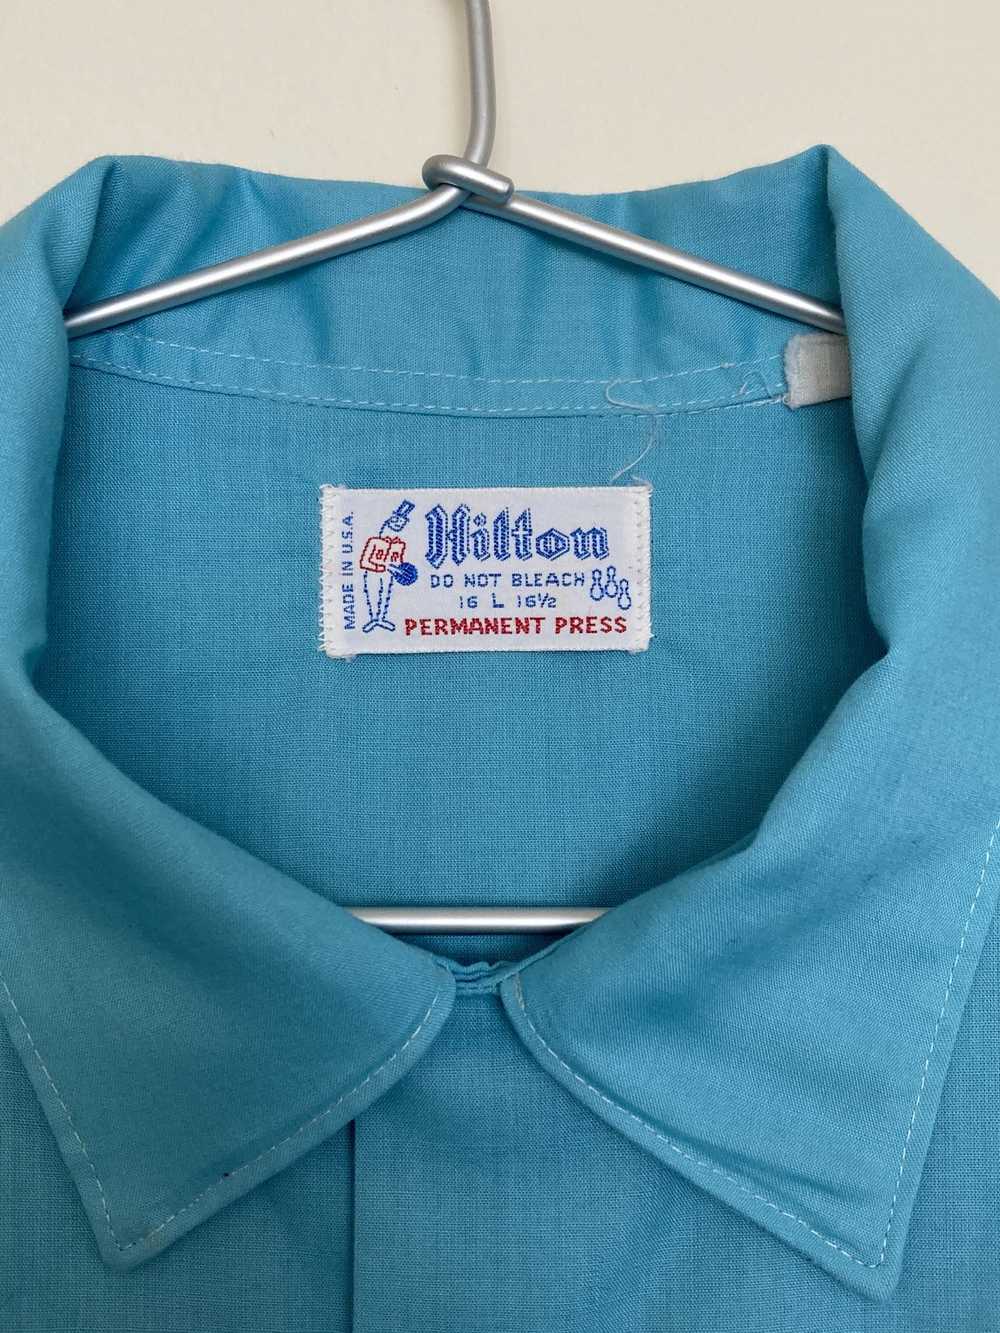 Other Hilton vintage bowling shirt - image 2